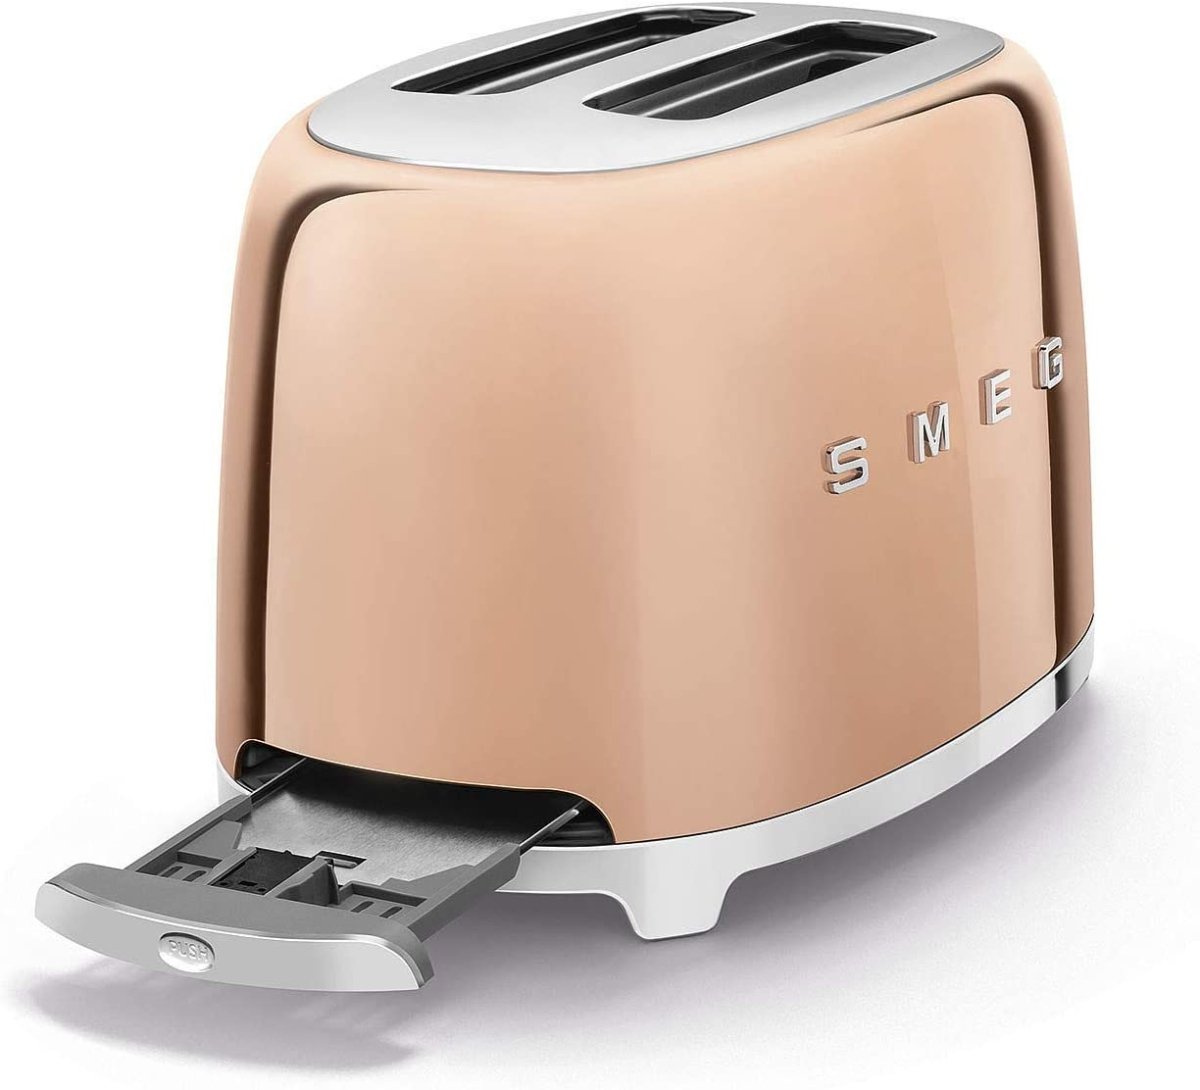 Smeg TSF01RGUK 2 Slice Toaster, Extra Wide Slots, 3 pre set options, Rose Gold | Atlantic Electrics